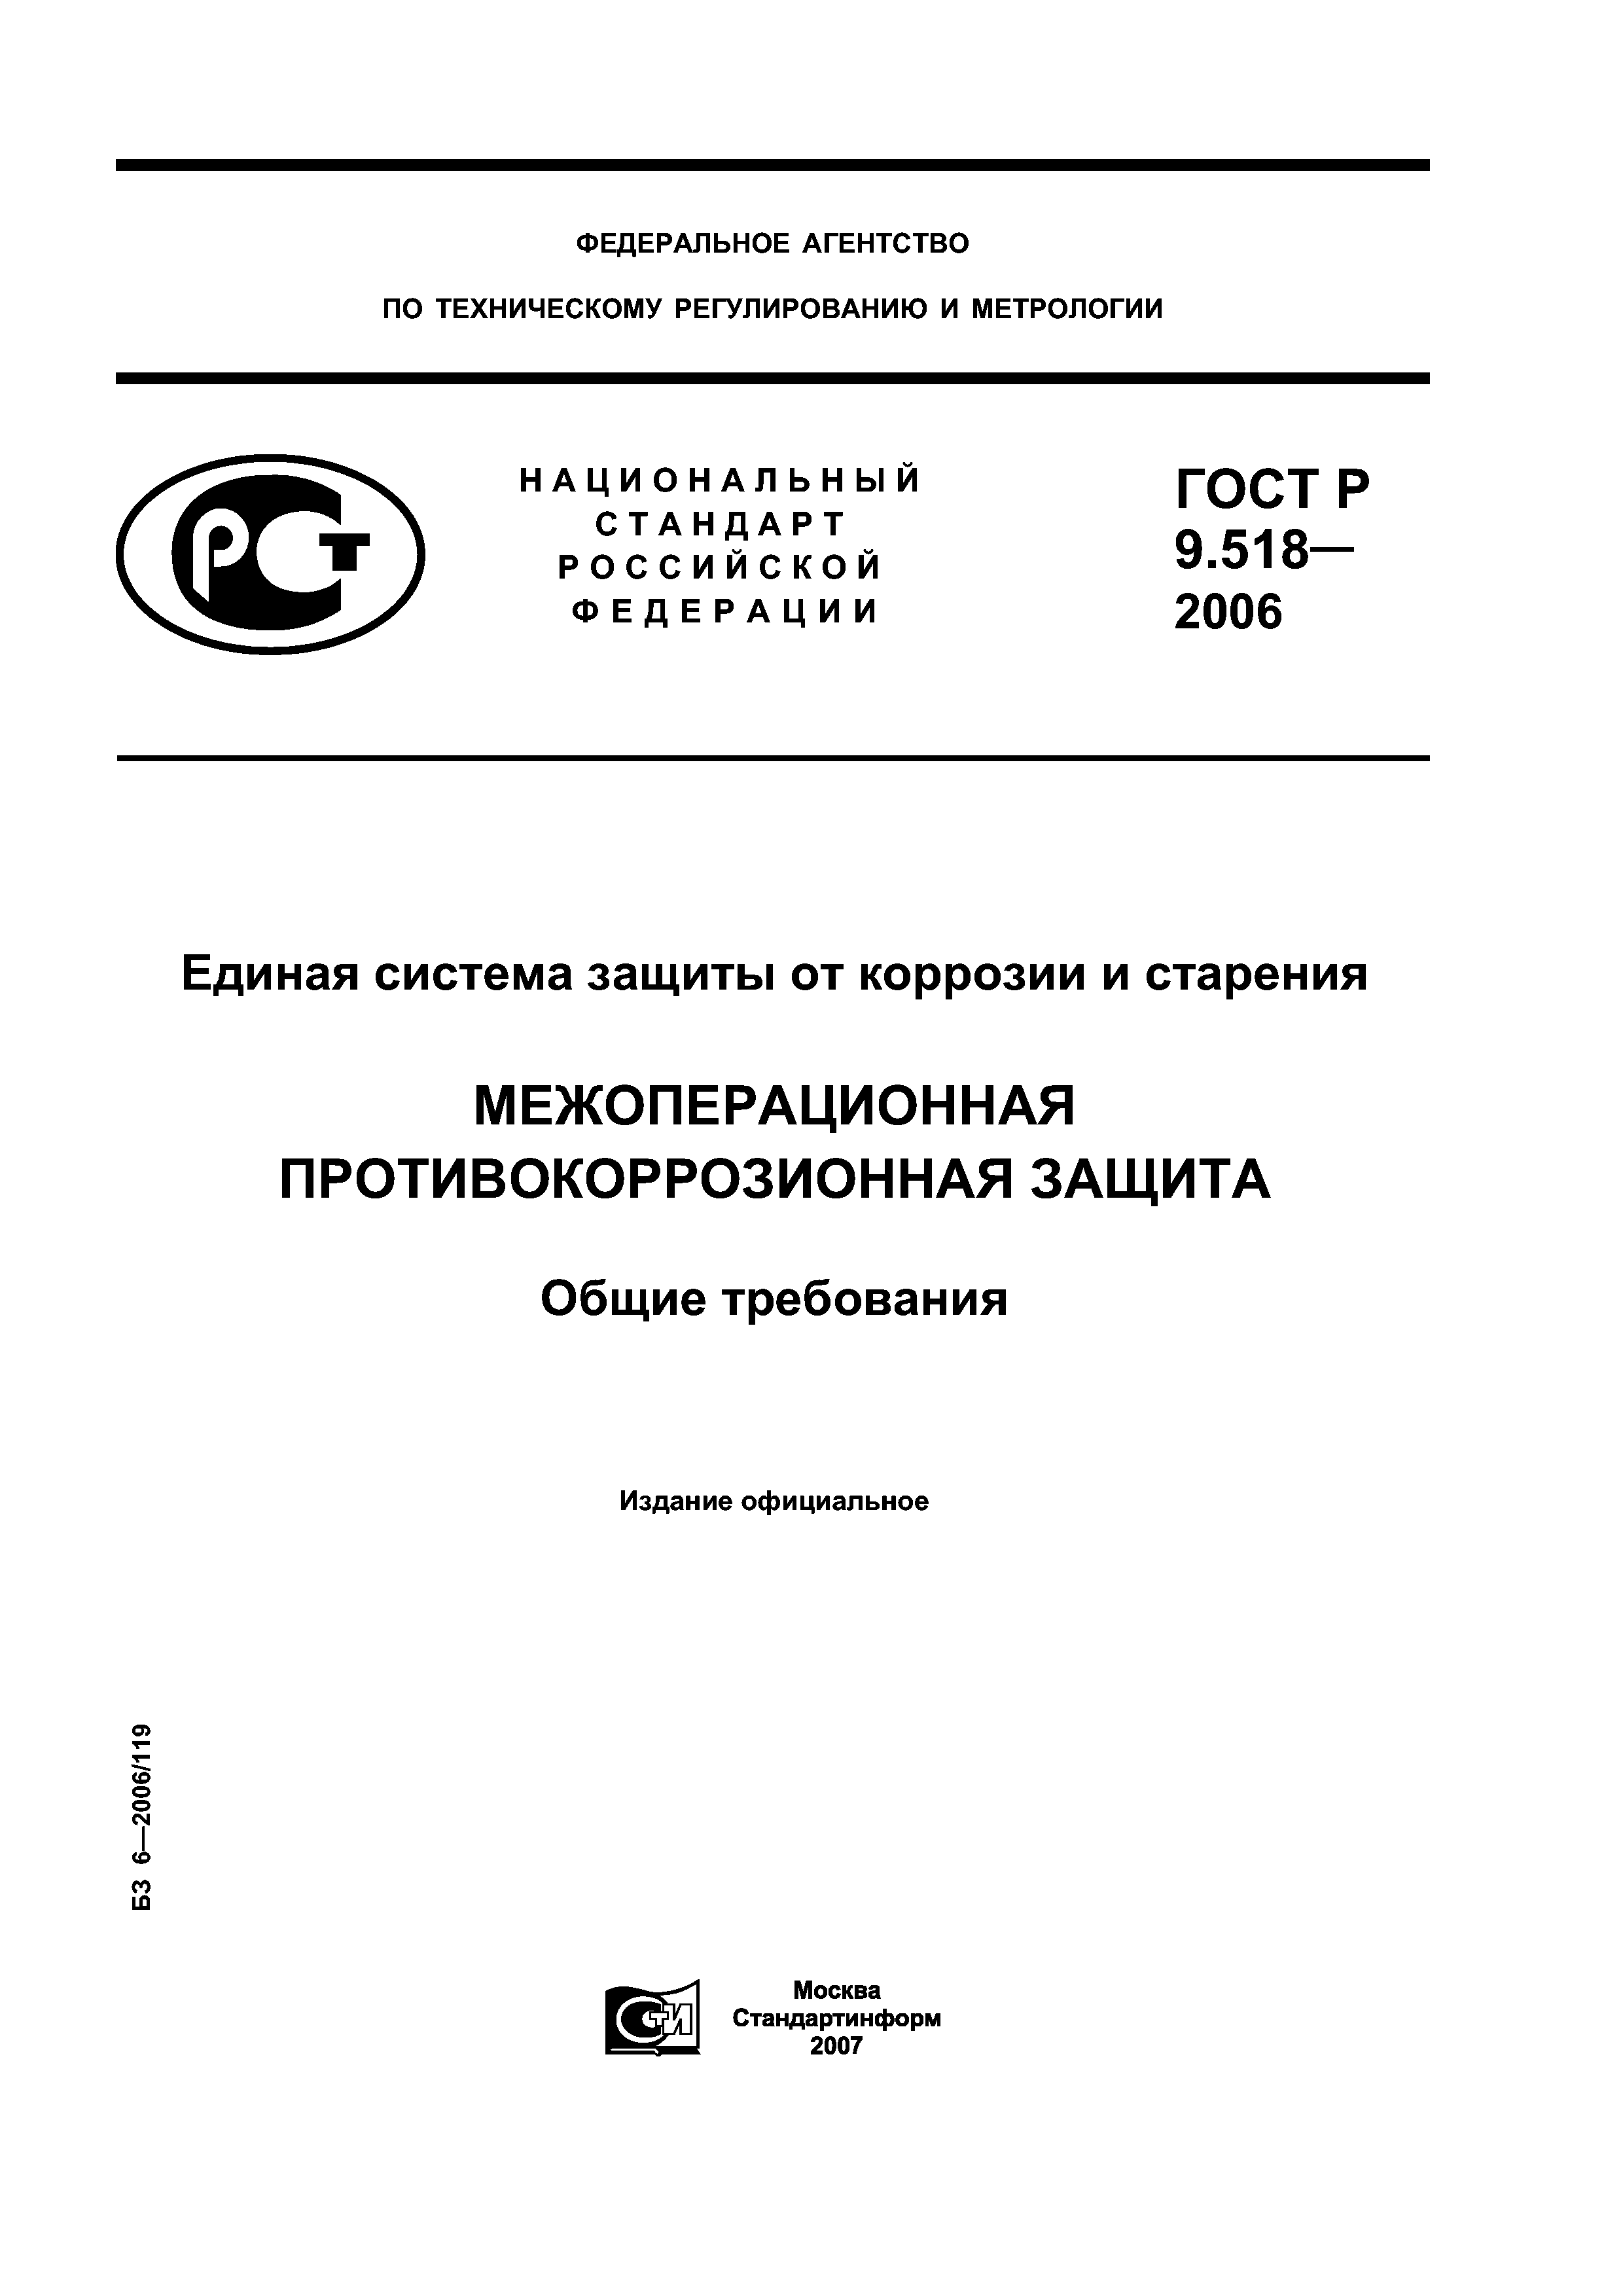 ГОСТ Р 9.518-2006